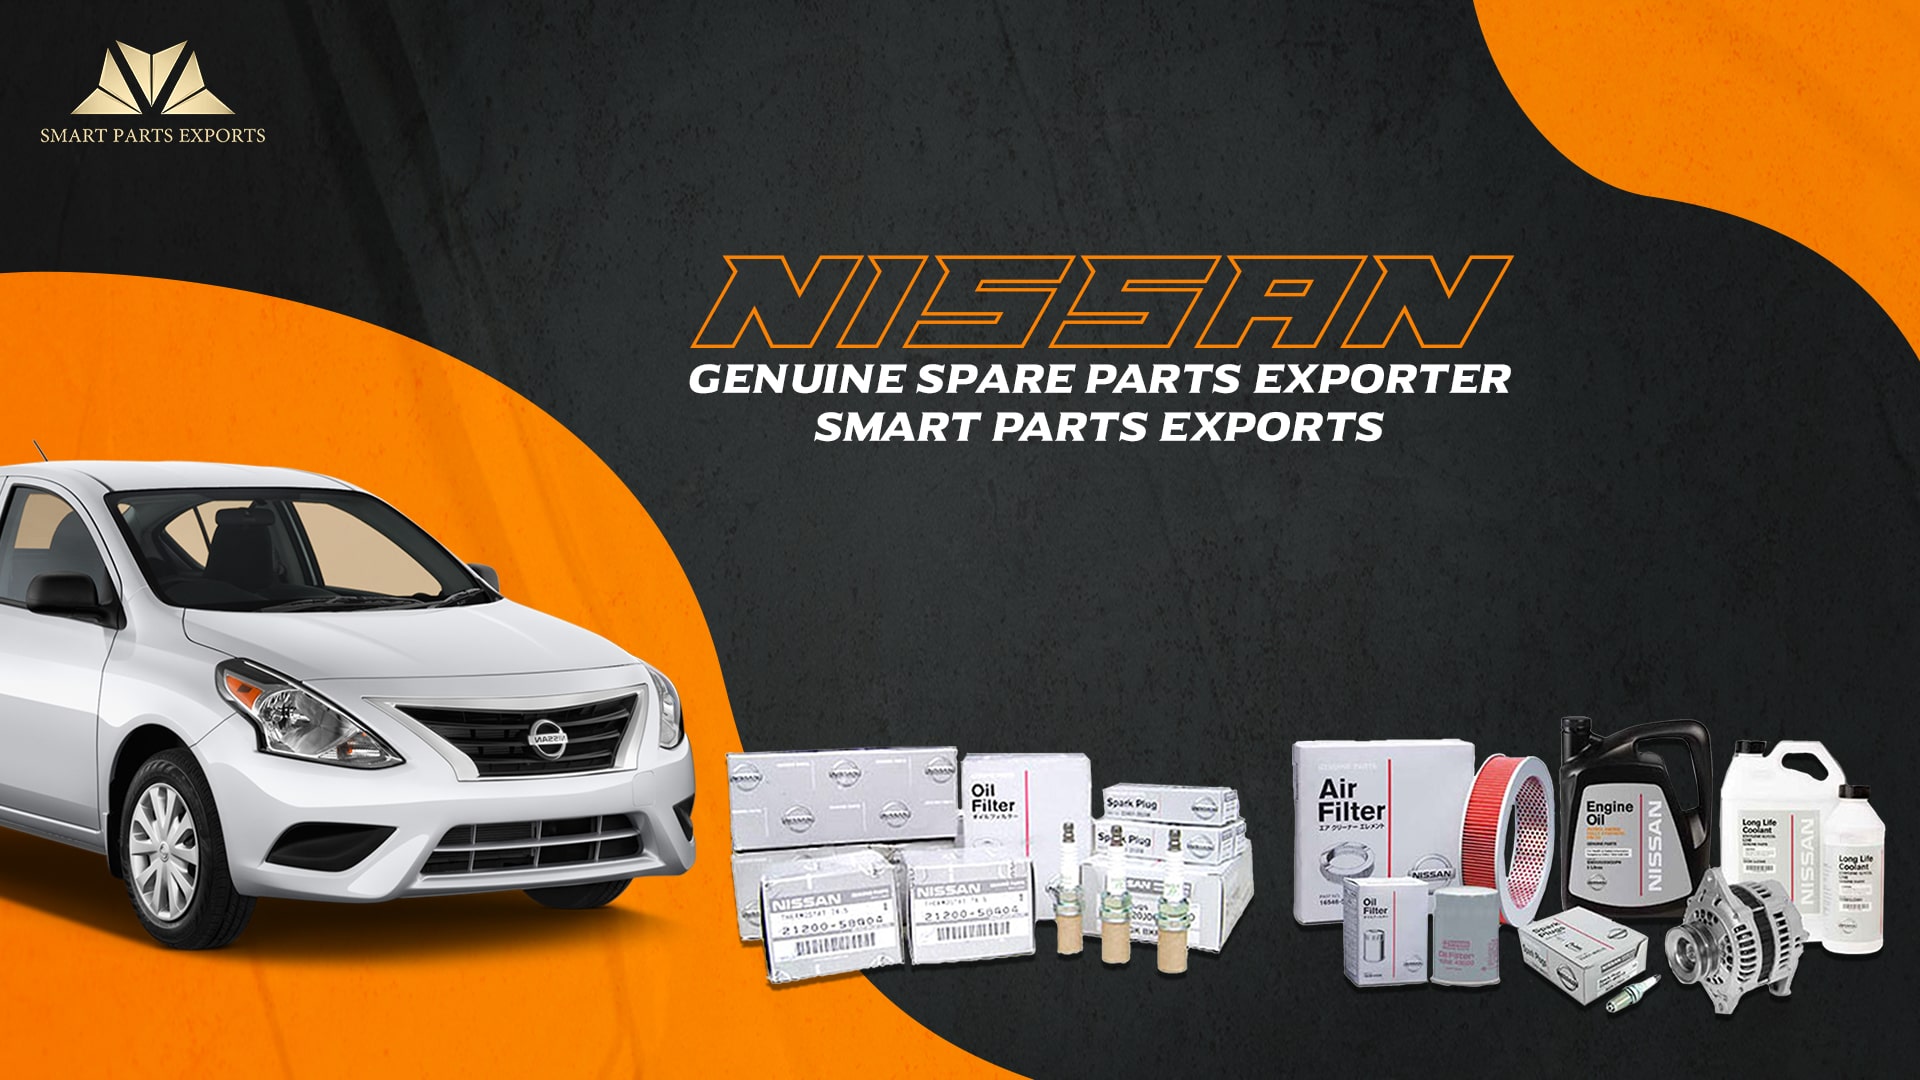 Nissan Genuine Spare Parts Exporter: Smart Parts Exports